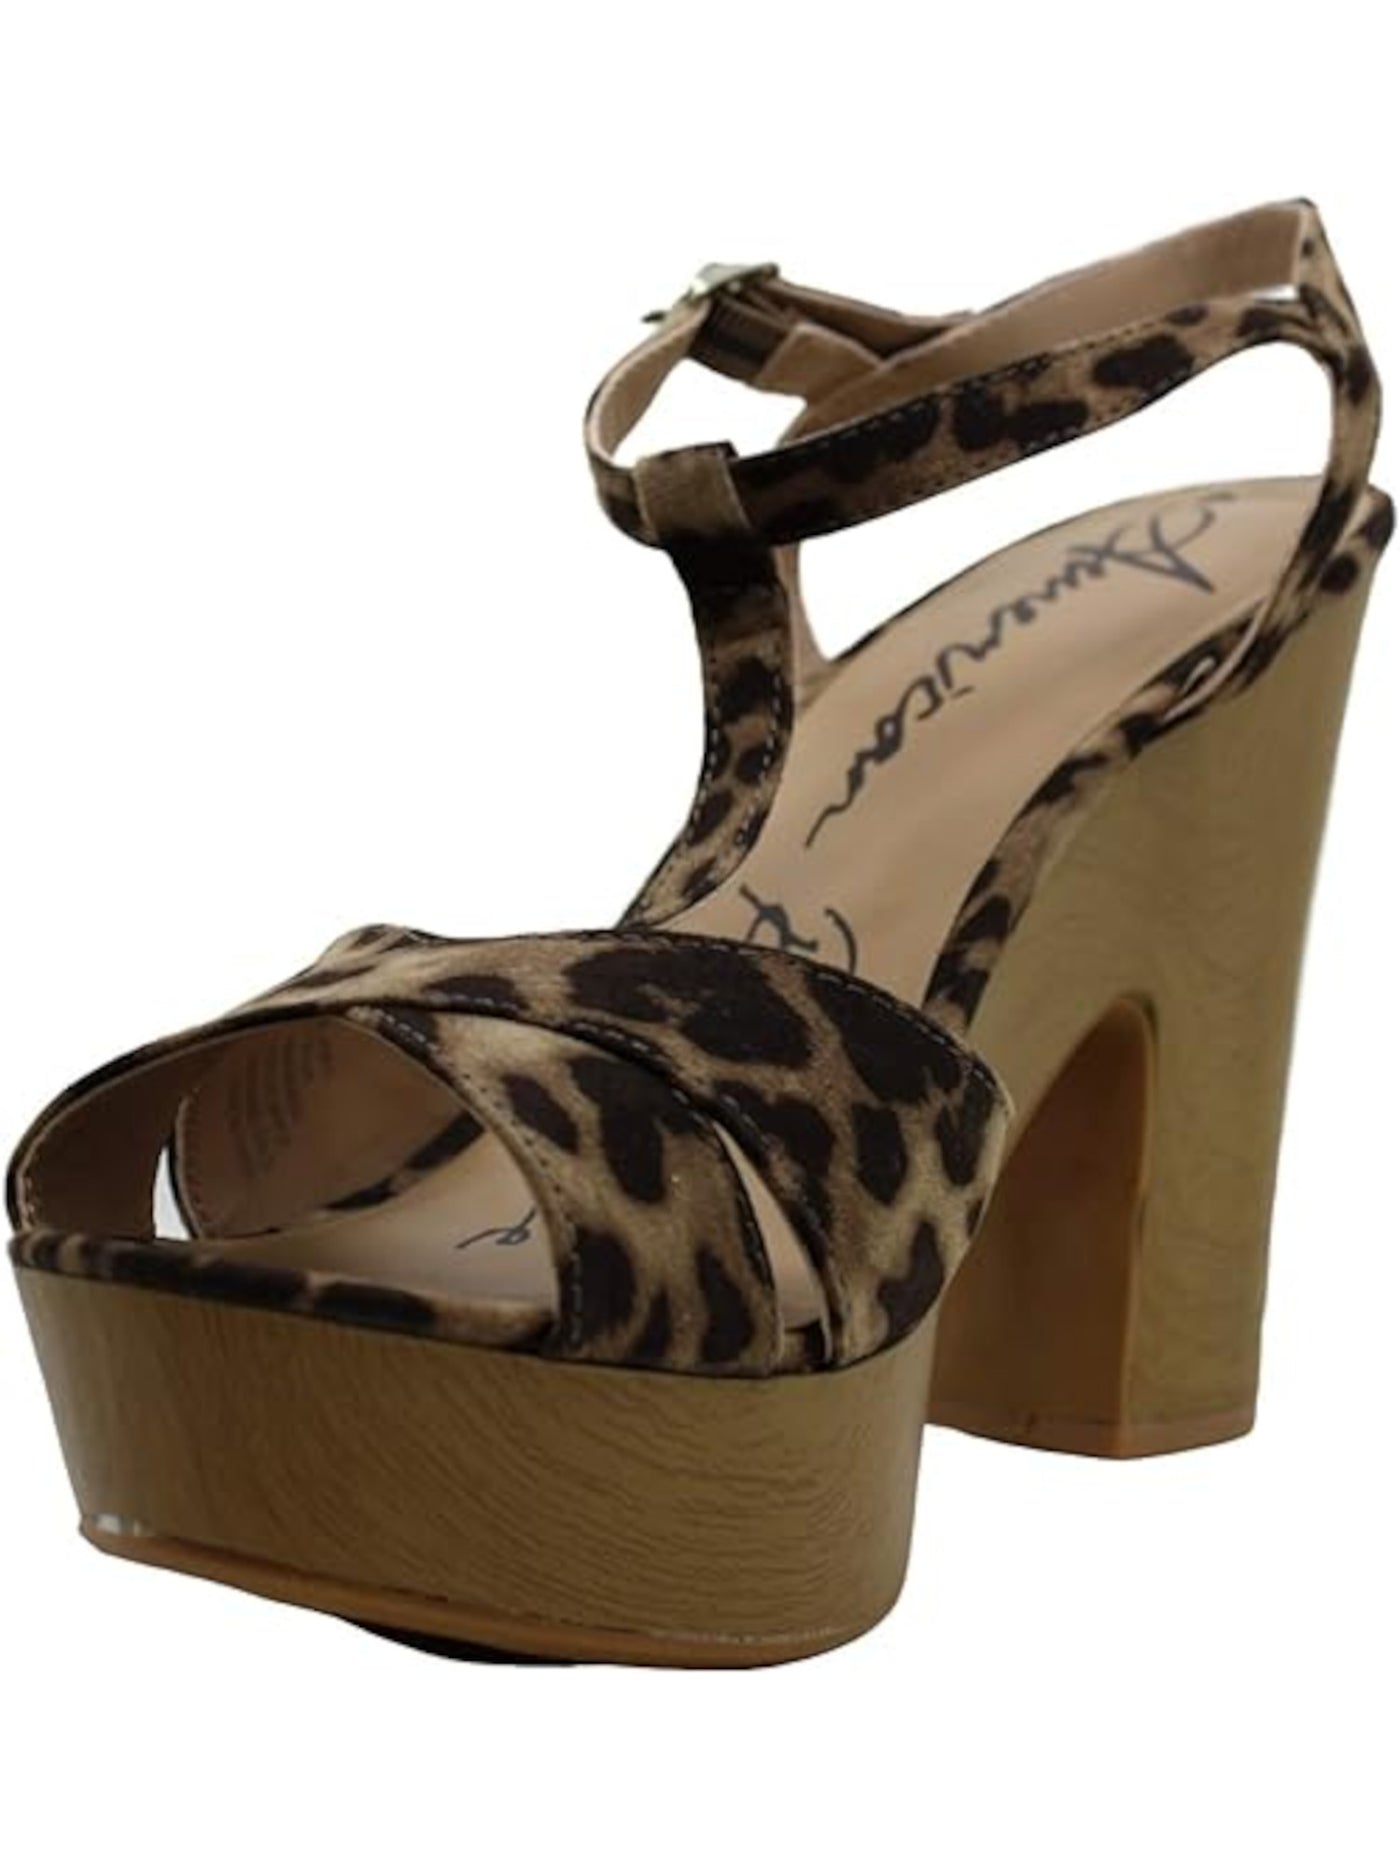 AMERICAN RAG Shoes Brown Leopard Print Juniors 9 M